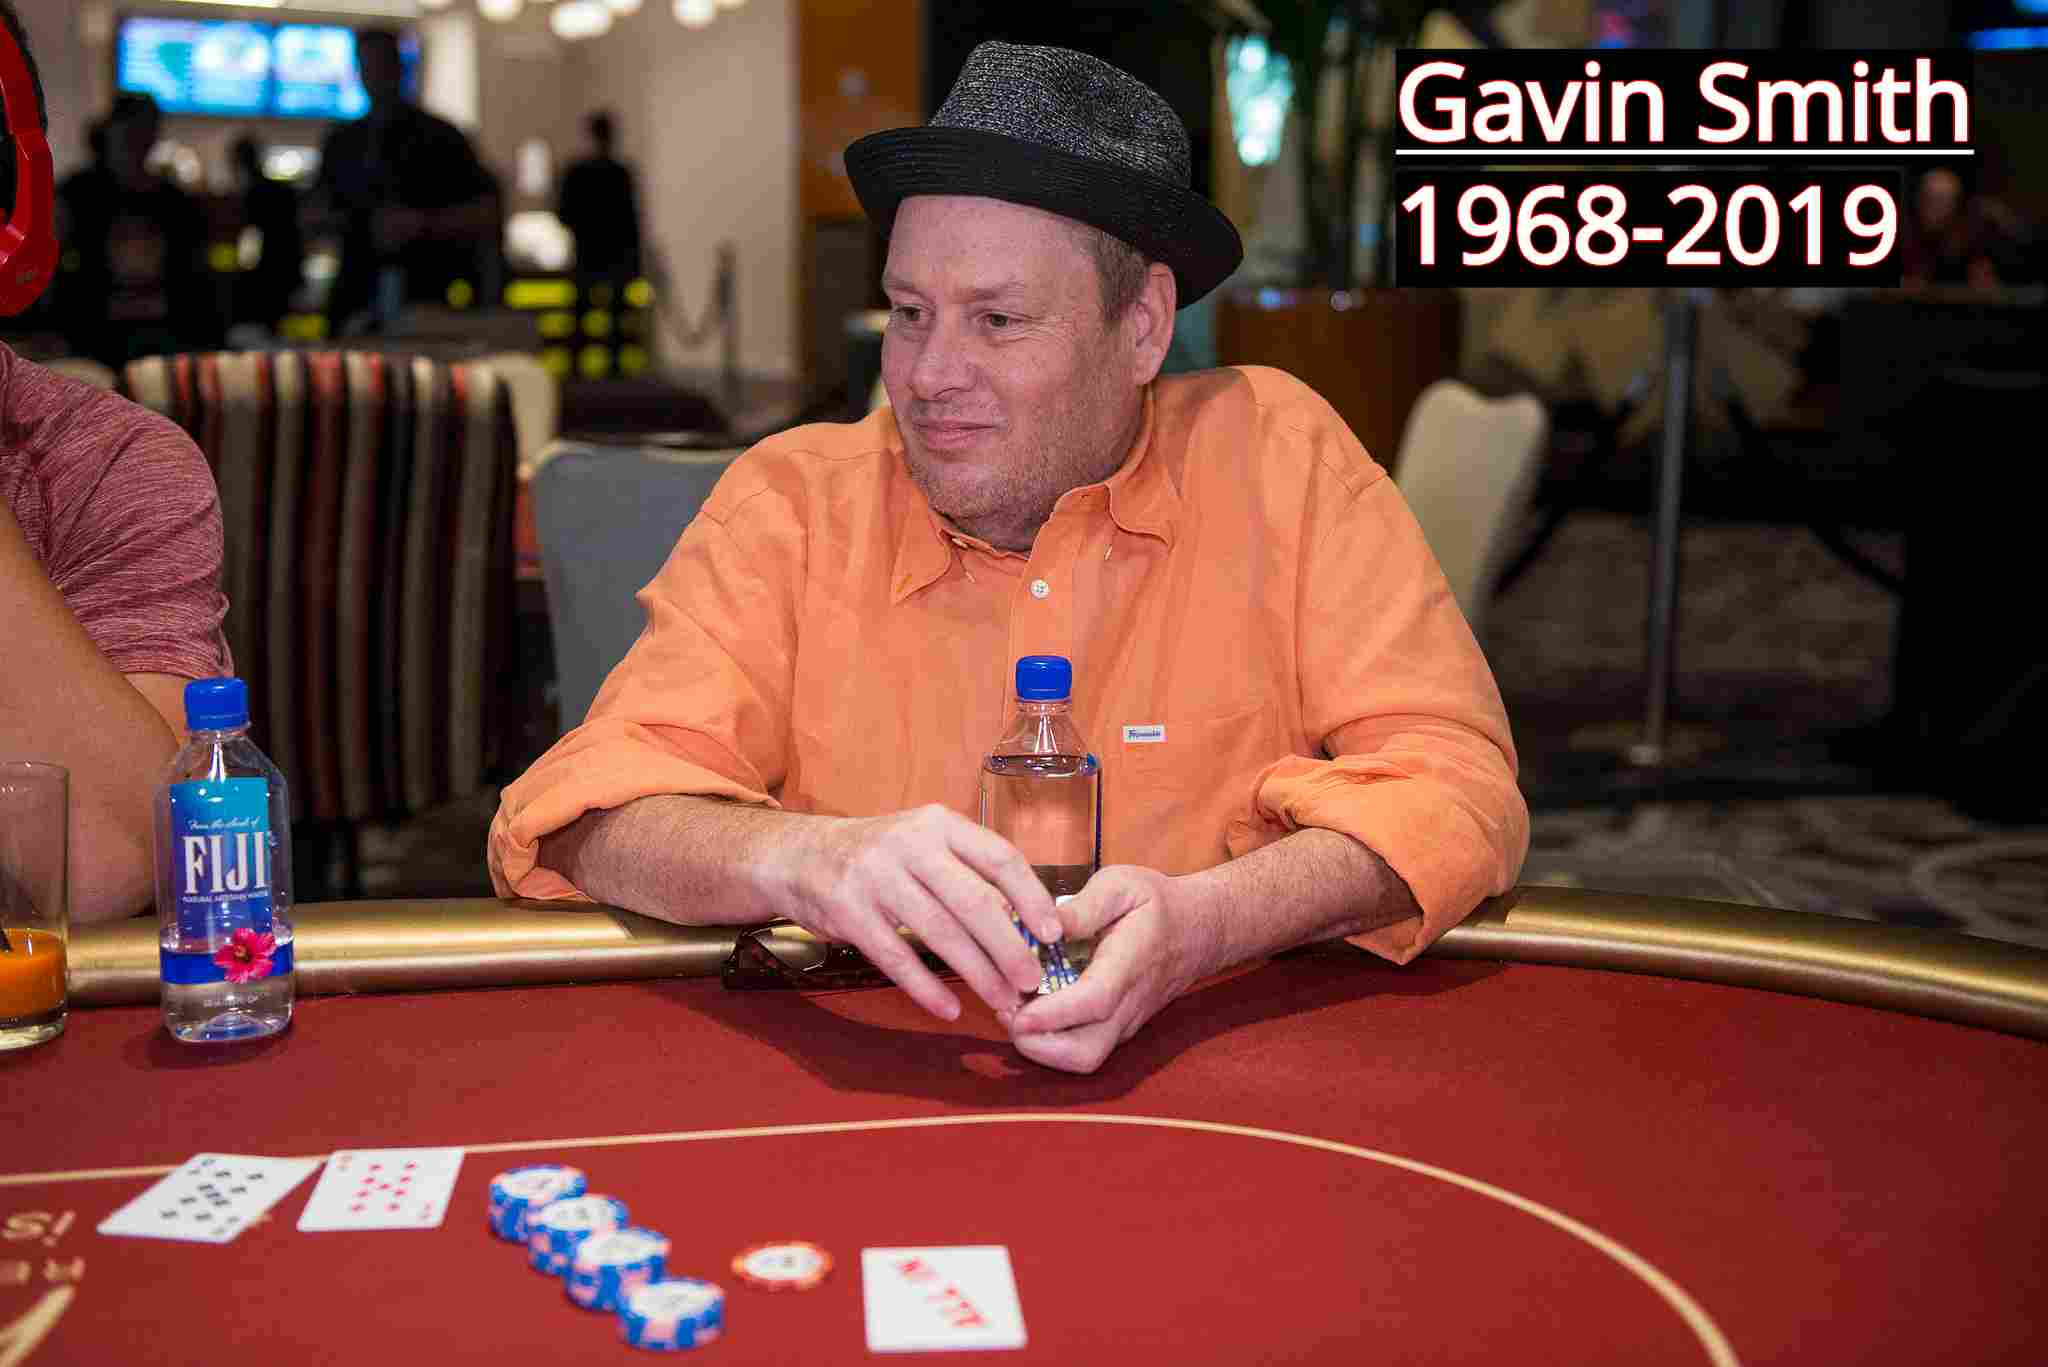 Poker Pro Gavin Smith Unexpectedly Passes Away at 50